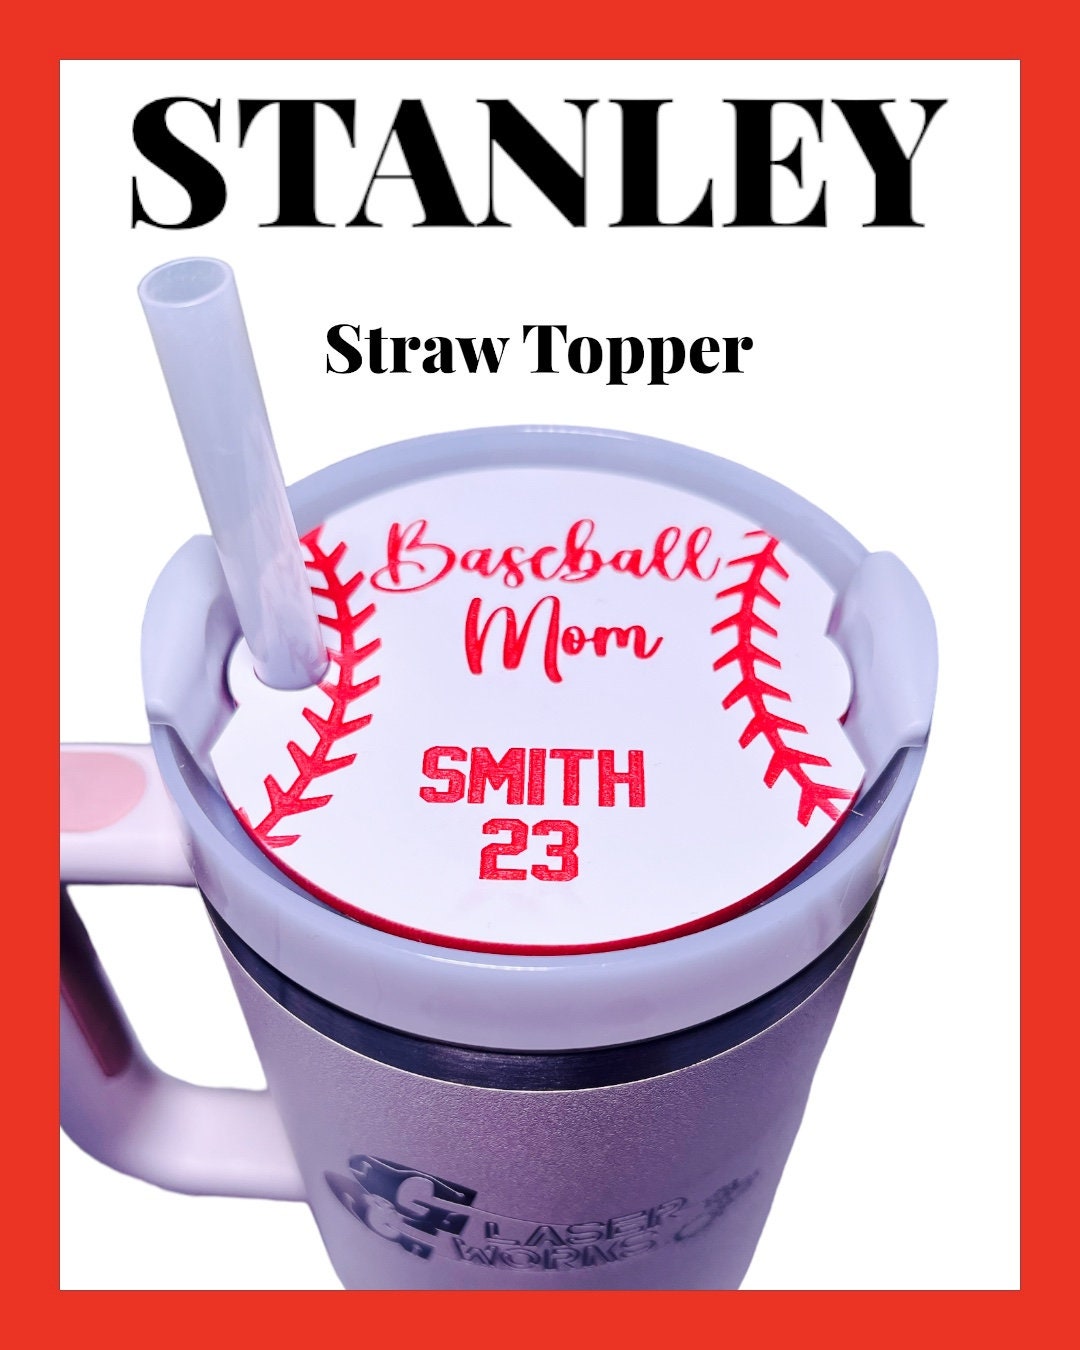 Softball Straw Topper, Bow Straw Topper, Stanley Straw Topper